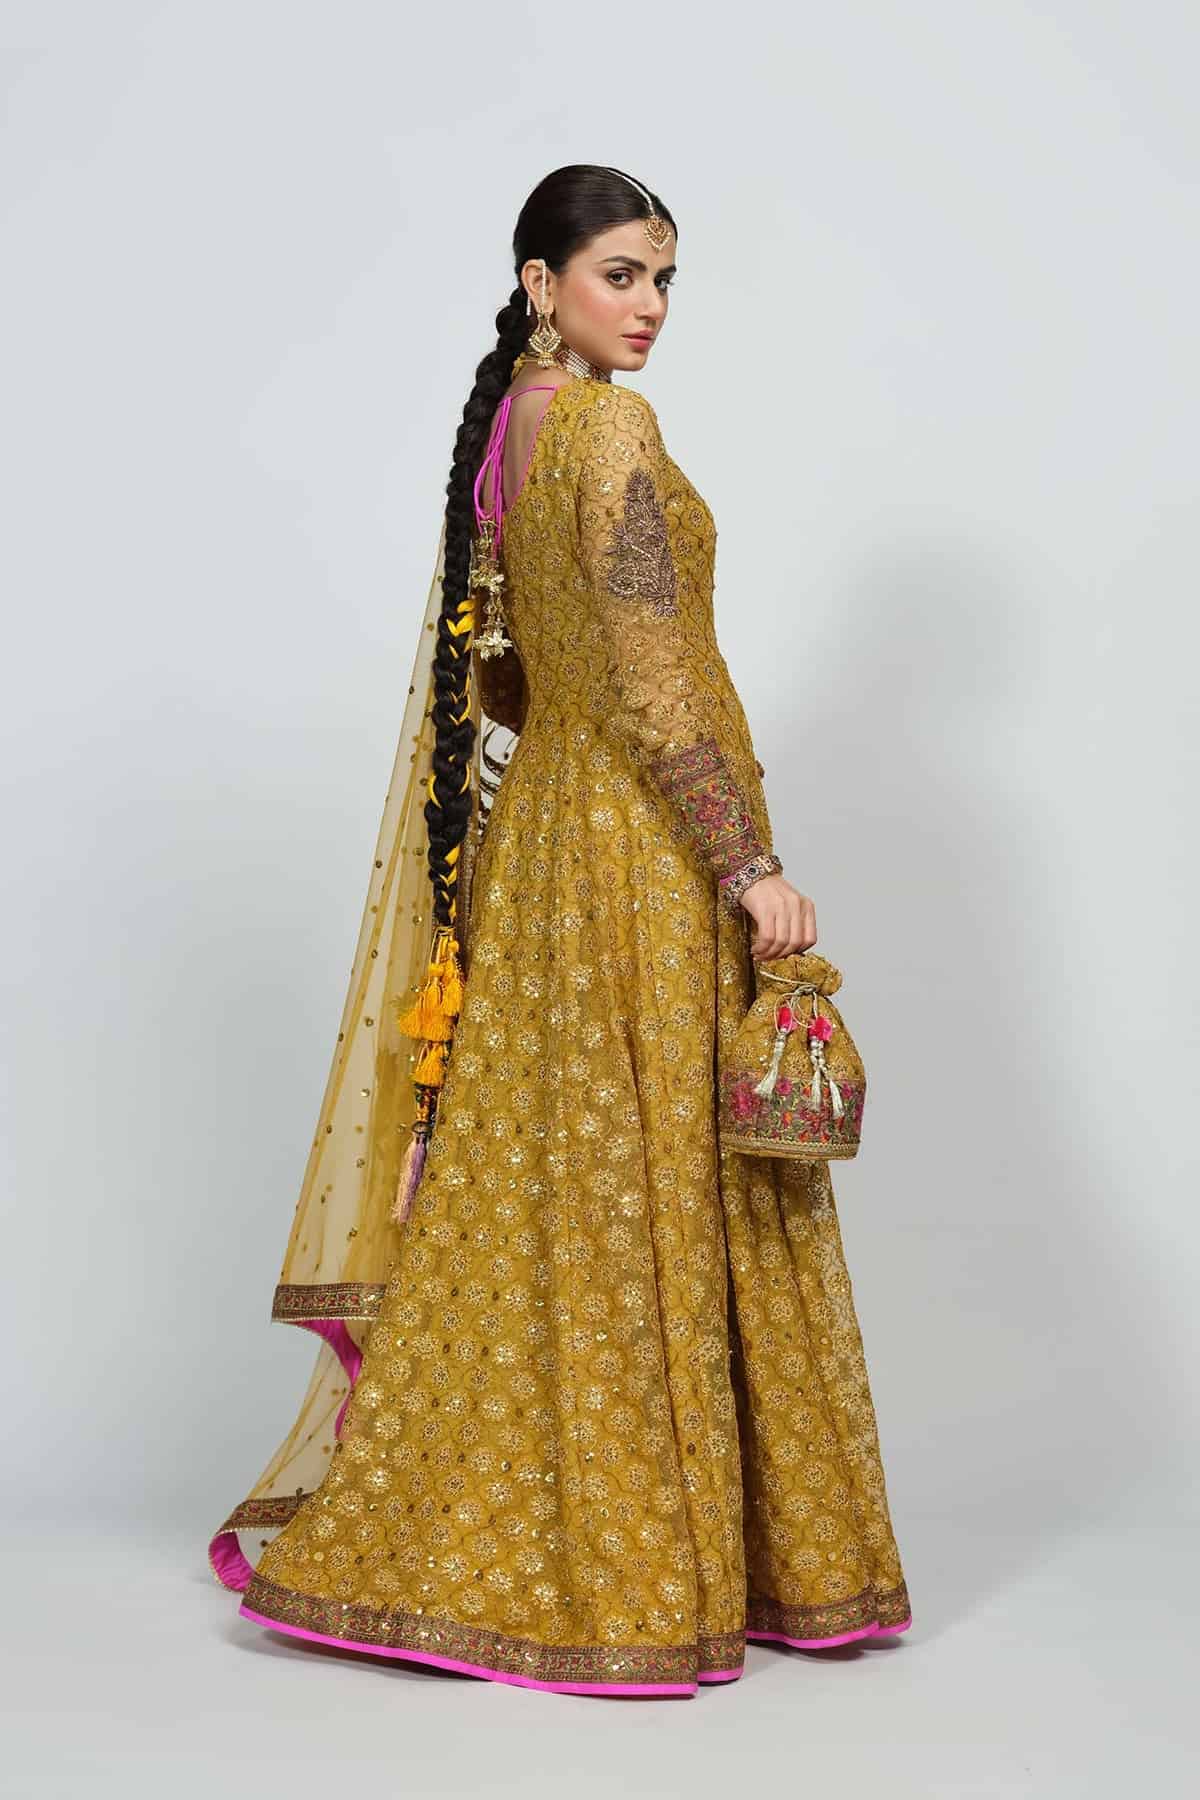 Haldi Outfit Ideas | Outfit Ideas For Bridal Haldi